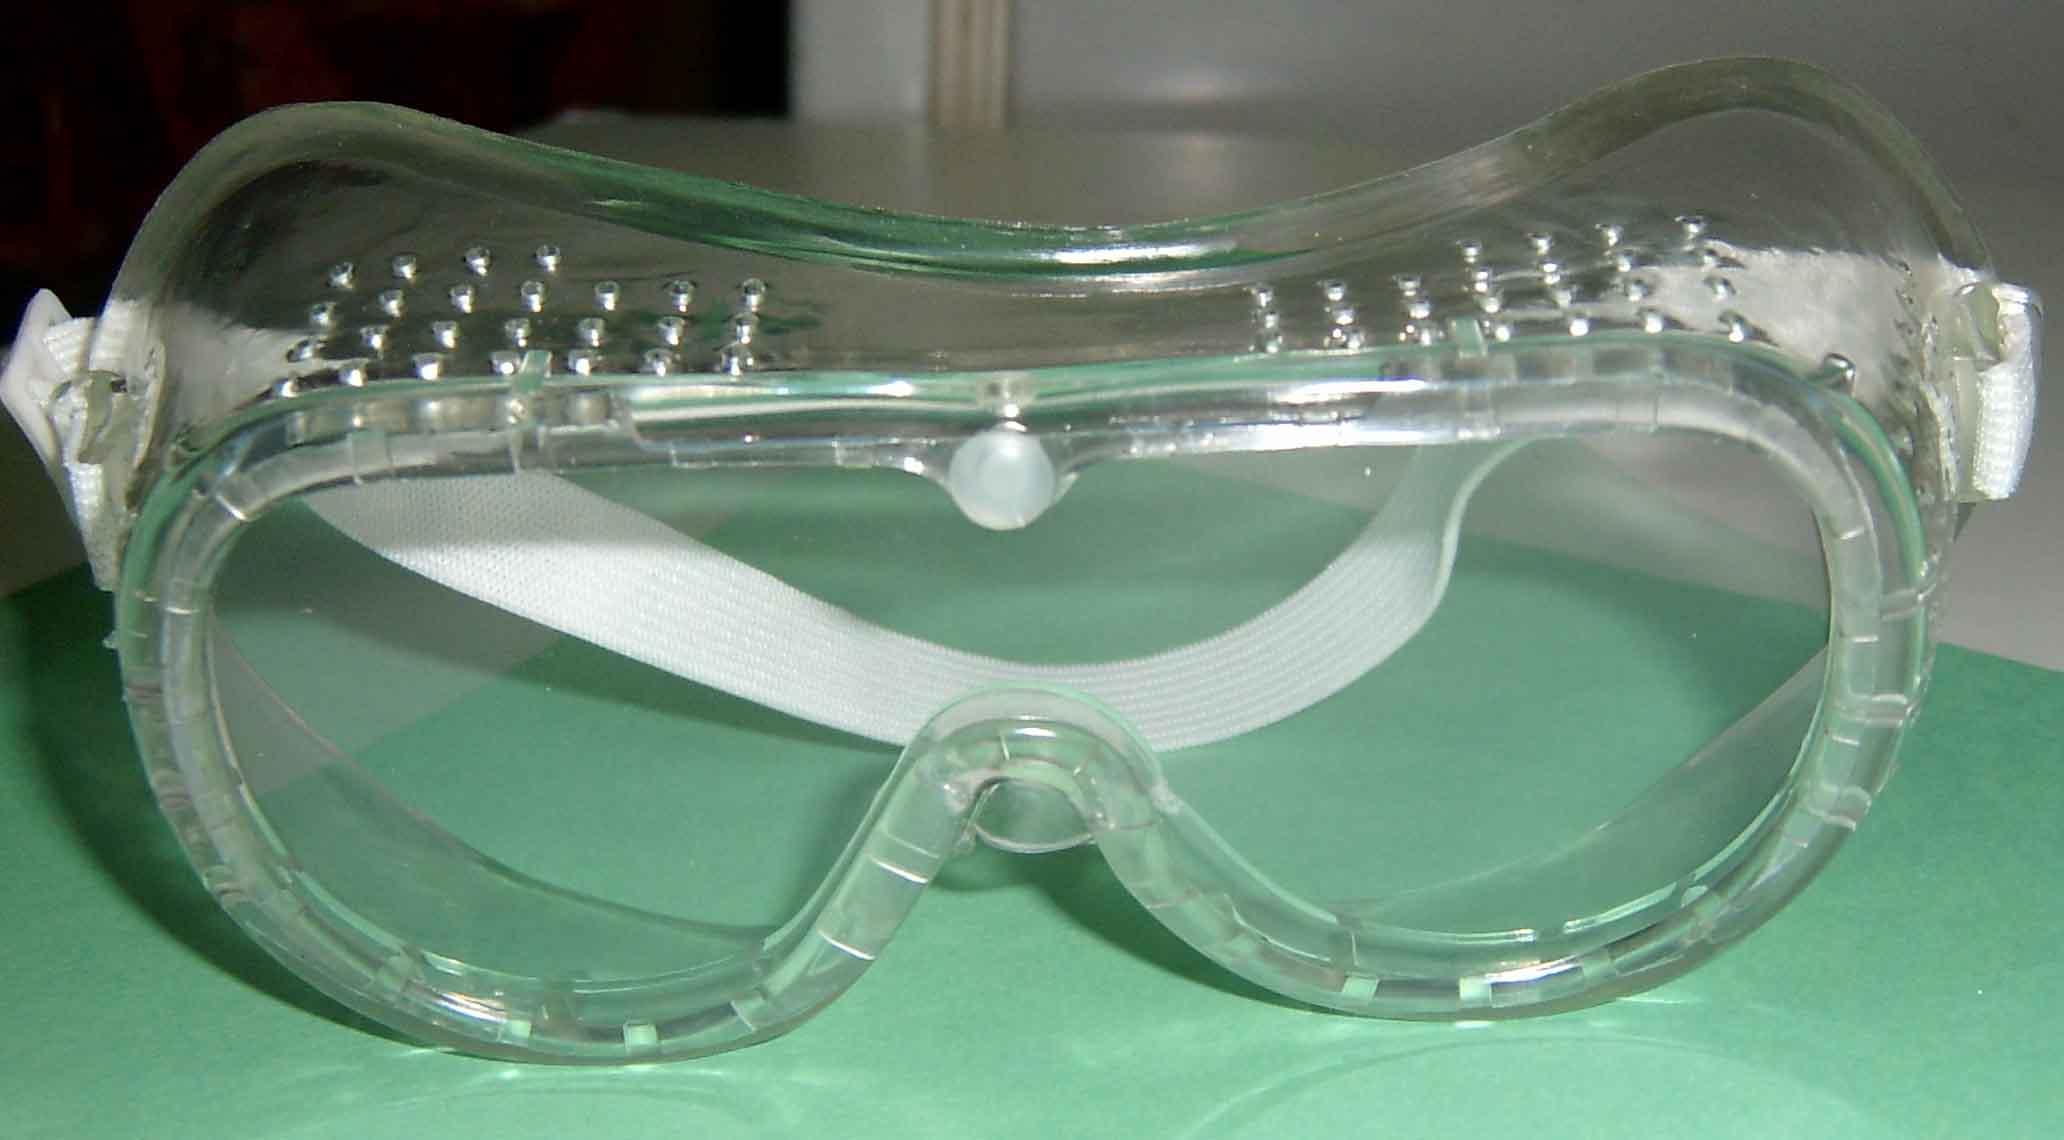  Protective Goggles (Защитные очки)